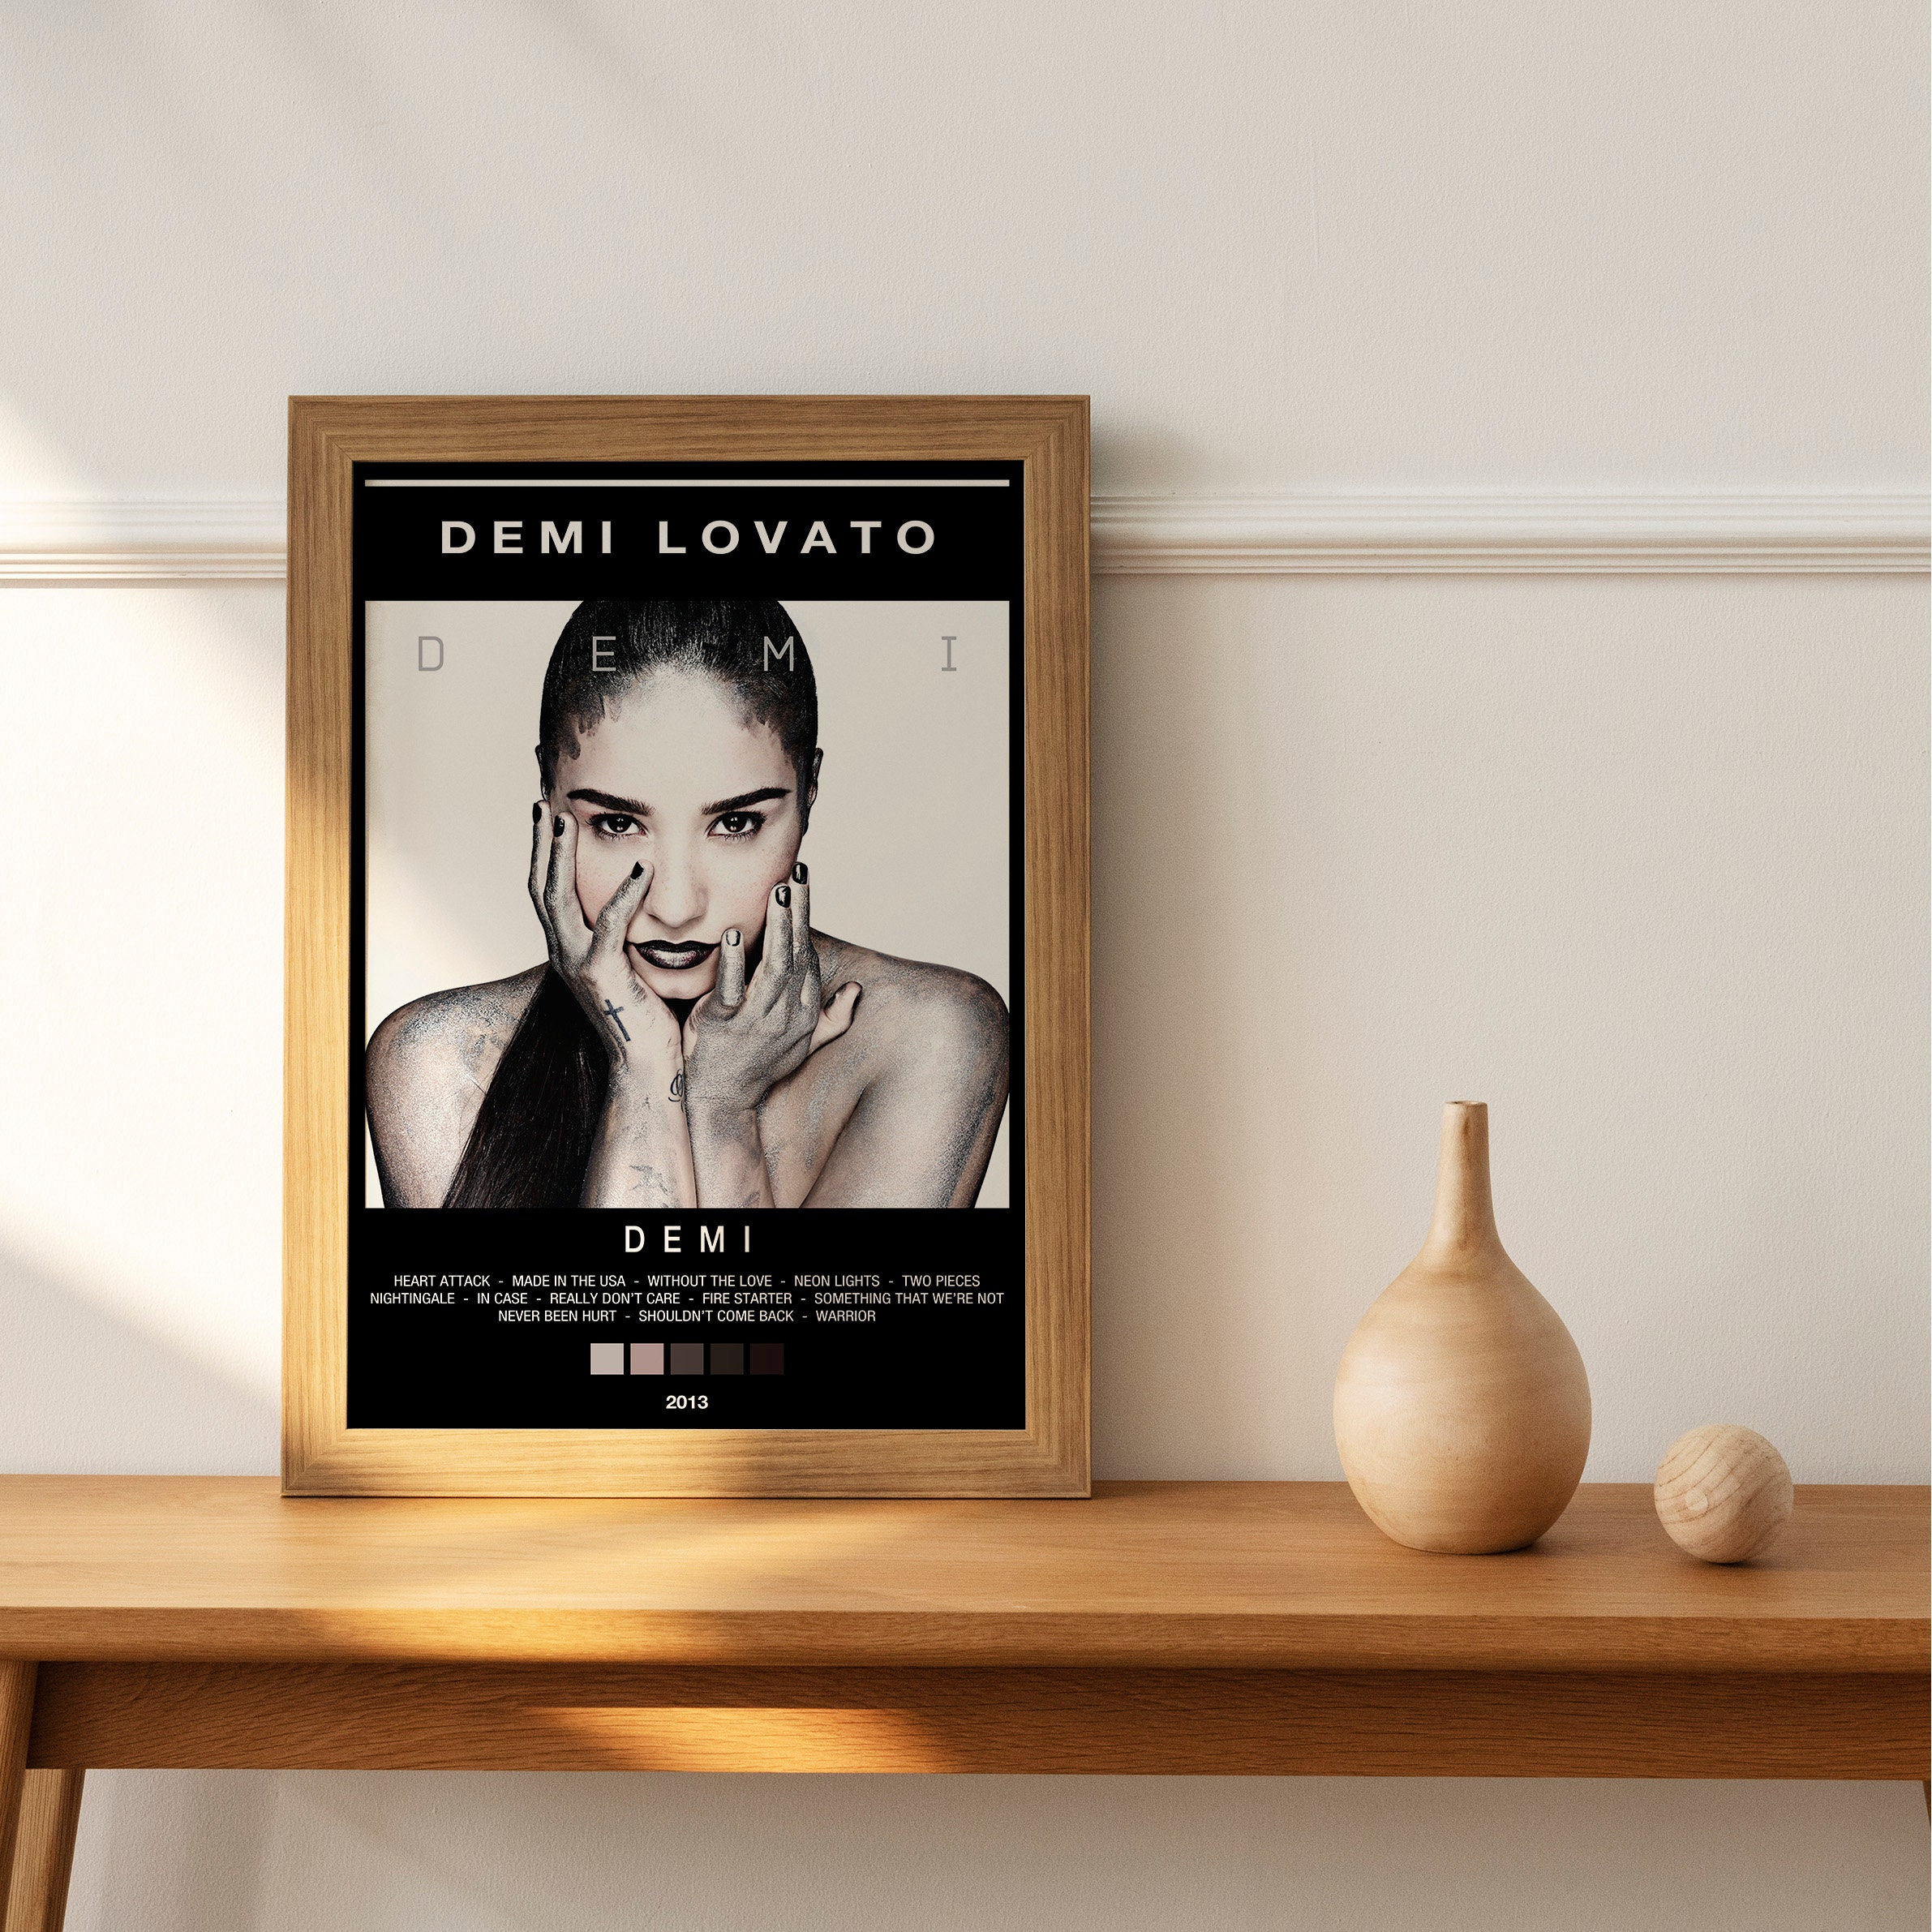 Demi Lovato Demi Album Poster, Multiple Color Options sold by Ivo  Ferreira, SKU 39563136